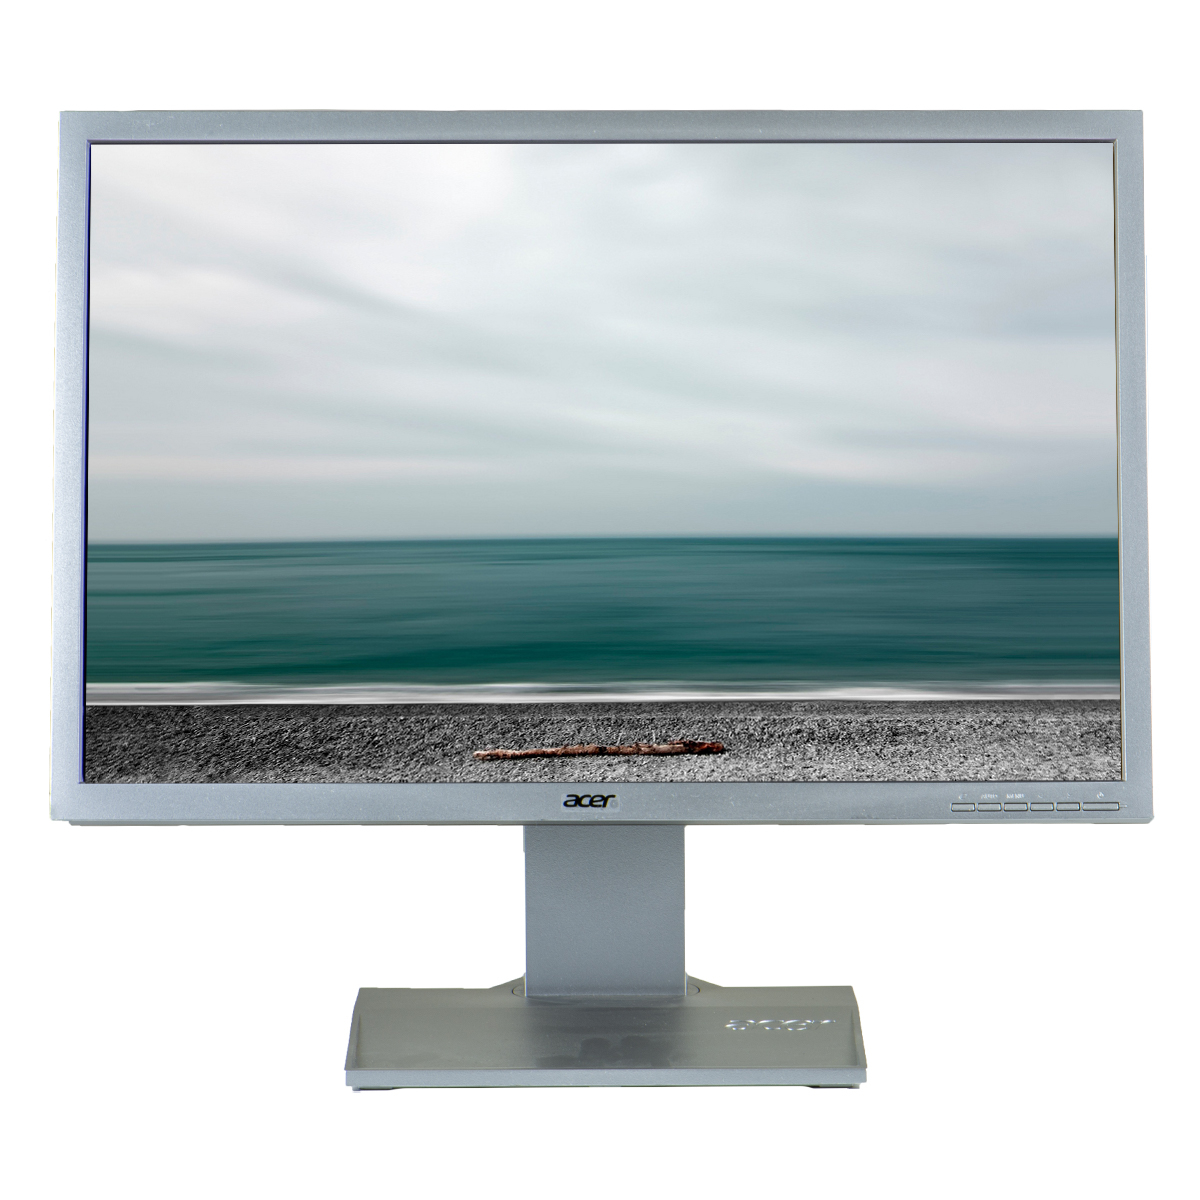 Acer B223WL  22 inch LED  1680 x 1050  16:10  negru - argintiu  monitor refurbished